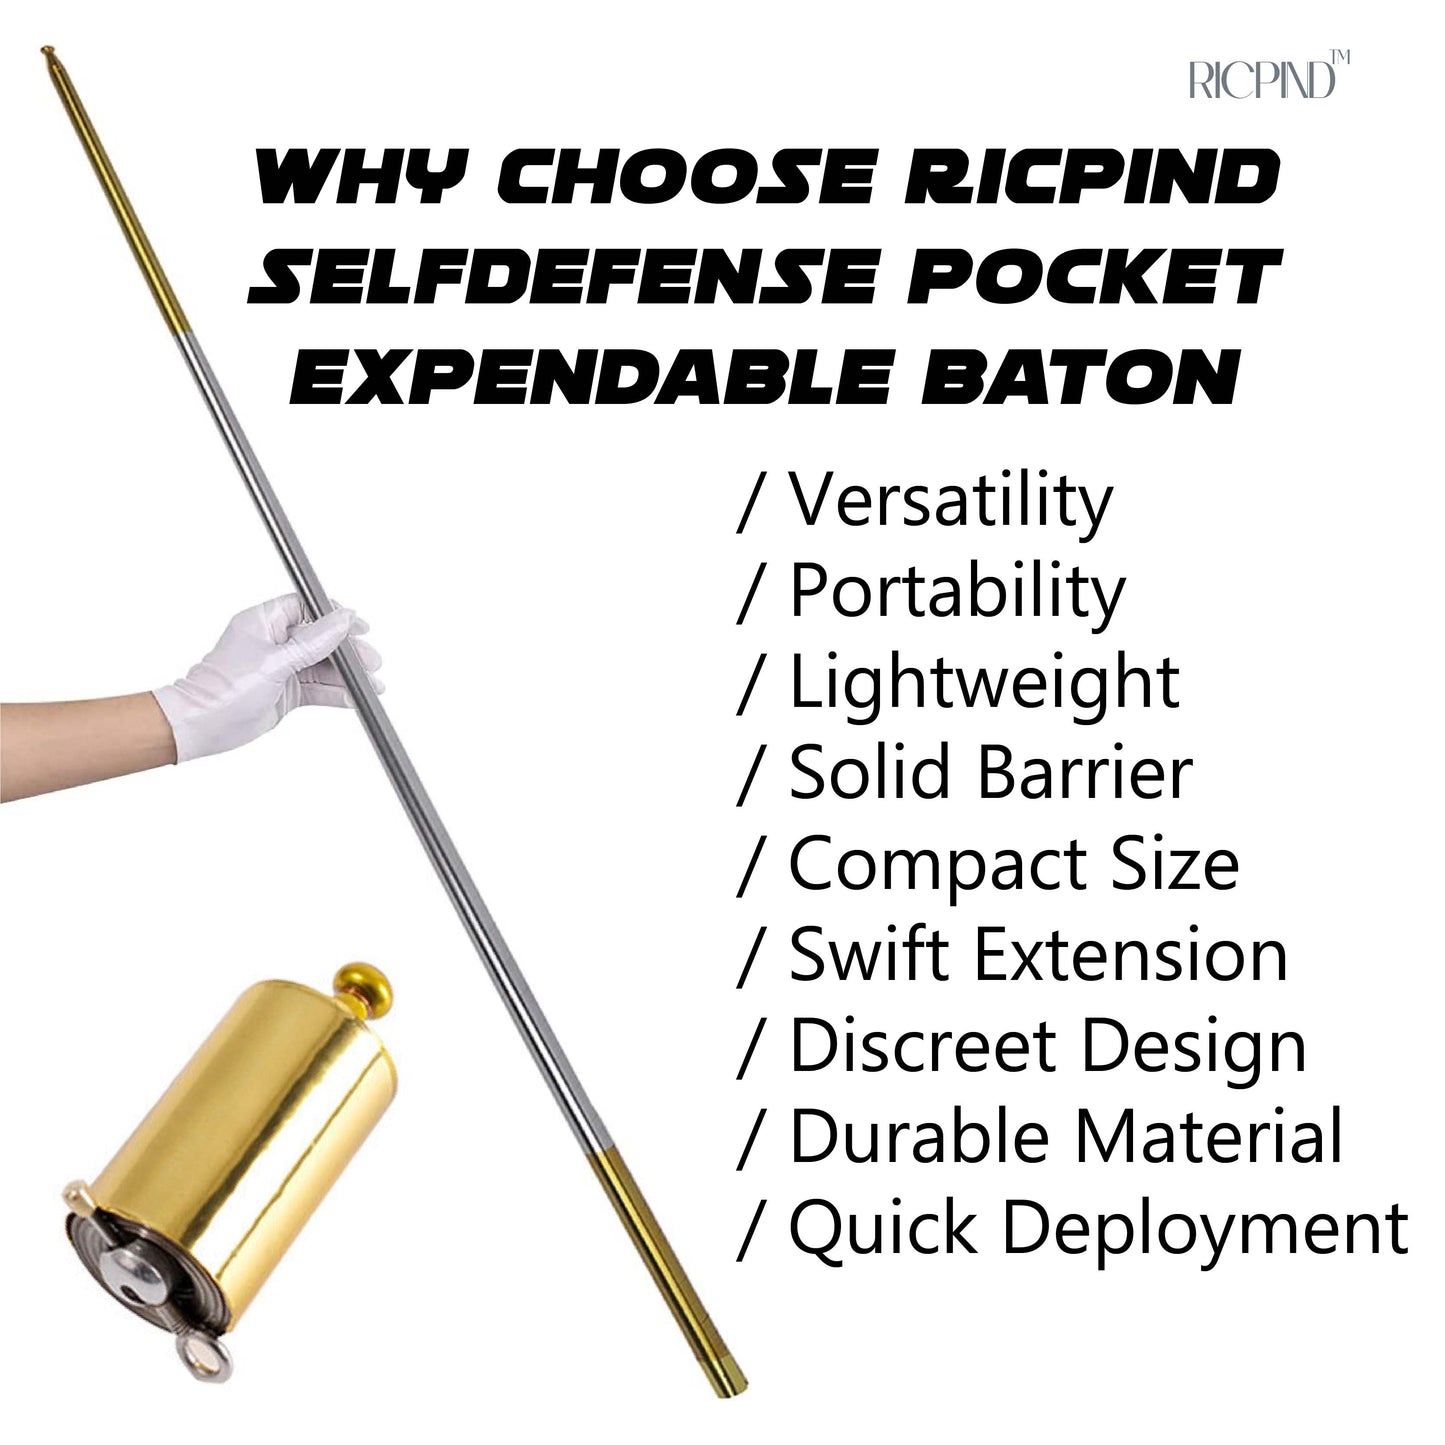 RICPIND SelfDefense Pocket Expendable Baton